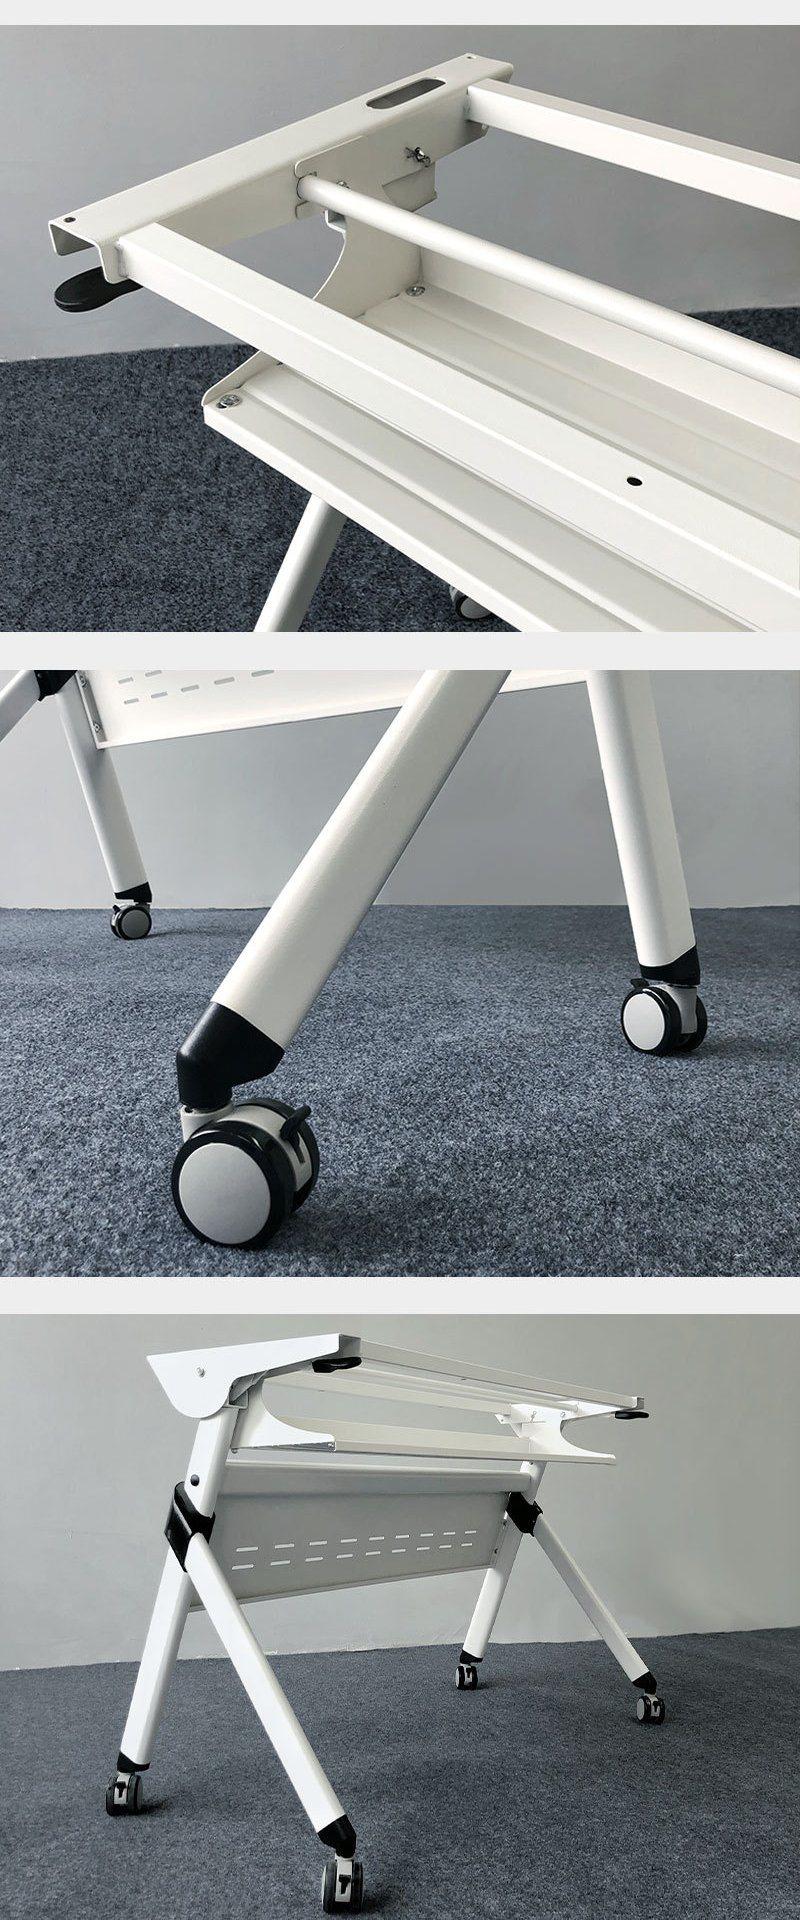 2022 Elites Latest Office Table Designs New Products Set Wooden Office Furniture School University Student Desk Adjustable Desk Office Desk